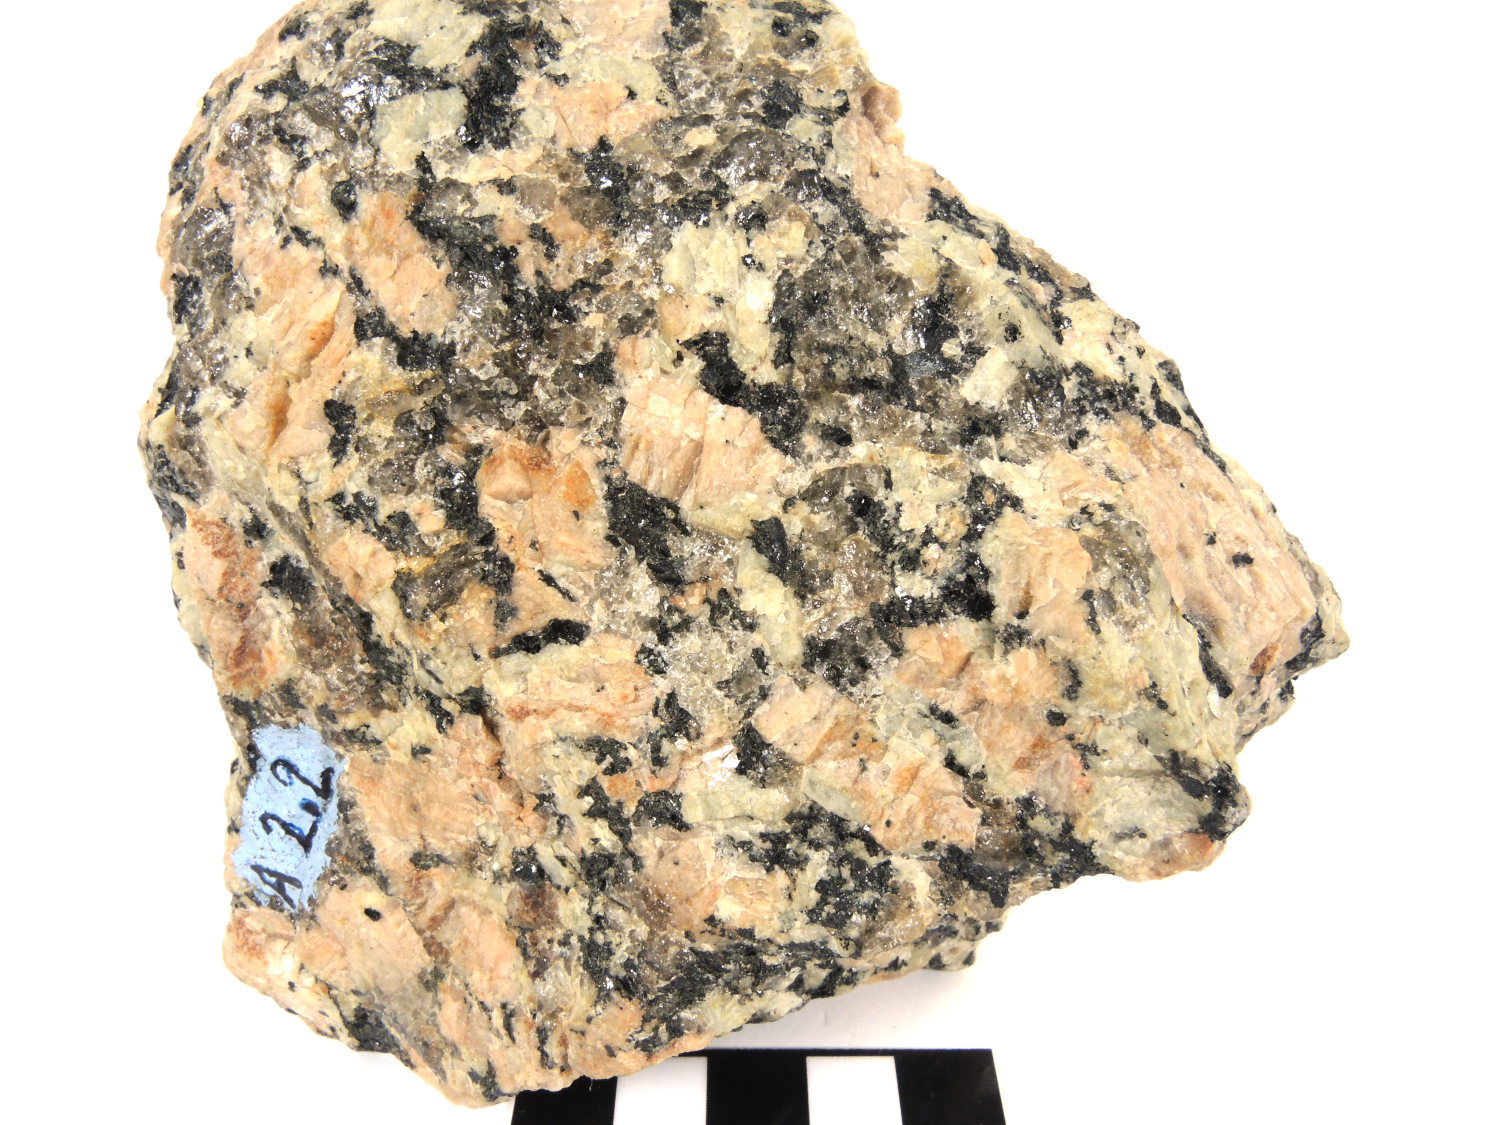 Granite à texture rapakivi Granite rose de Ploumanac’h Massif armoricain  Perros-Guirec La Clarté